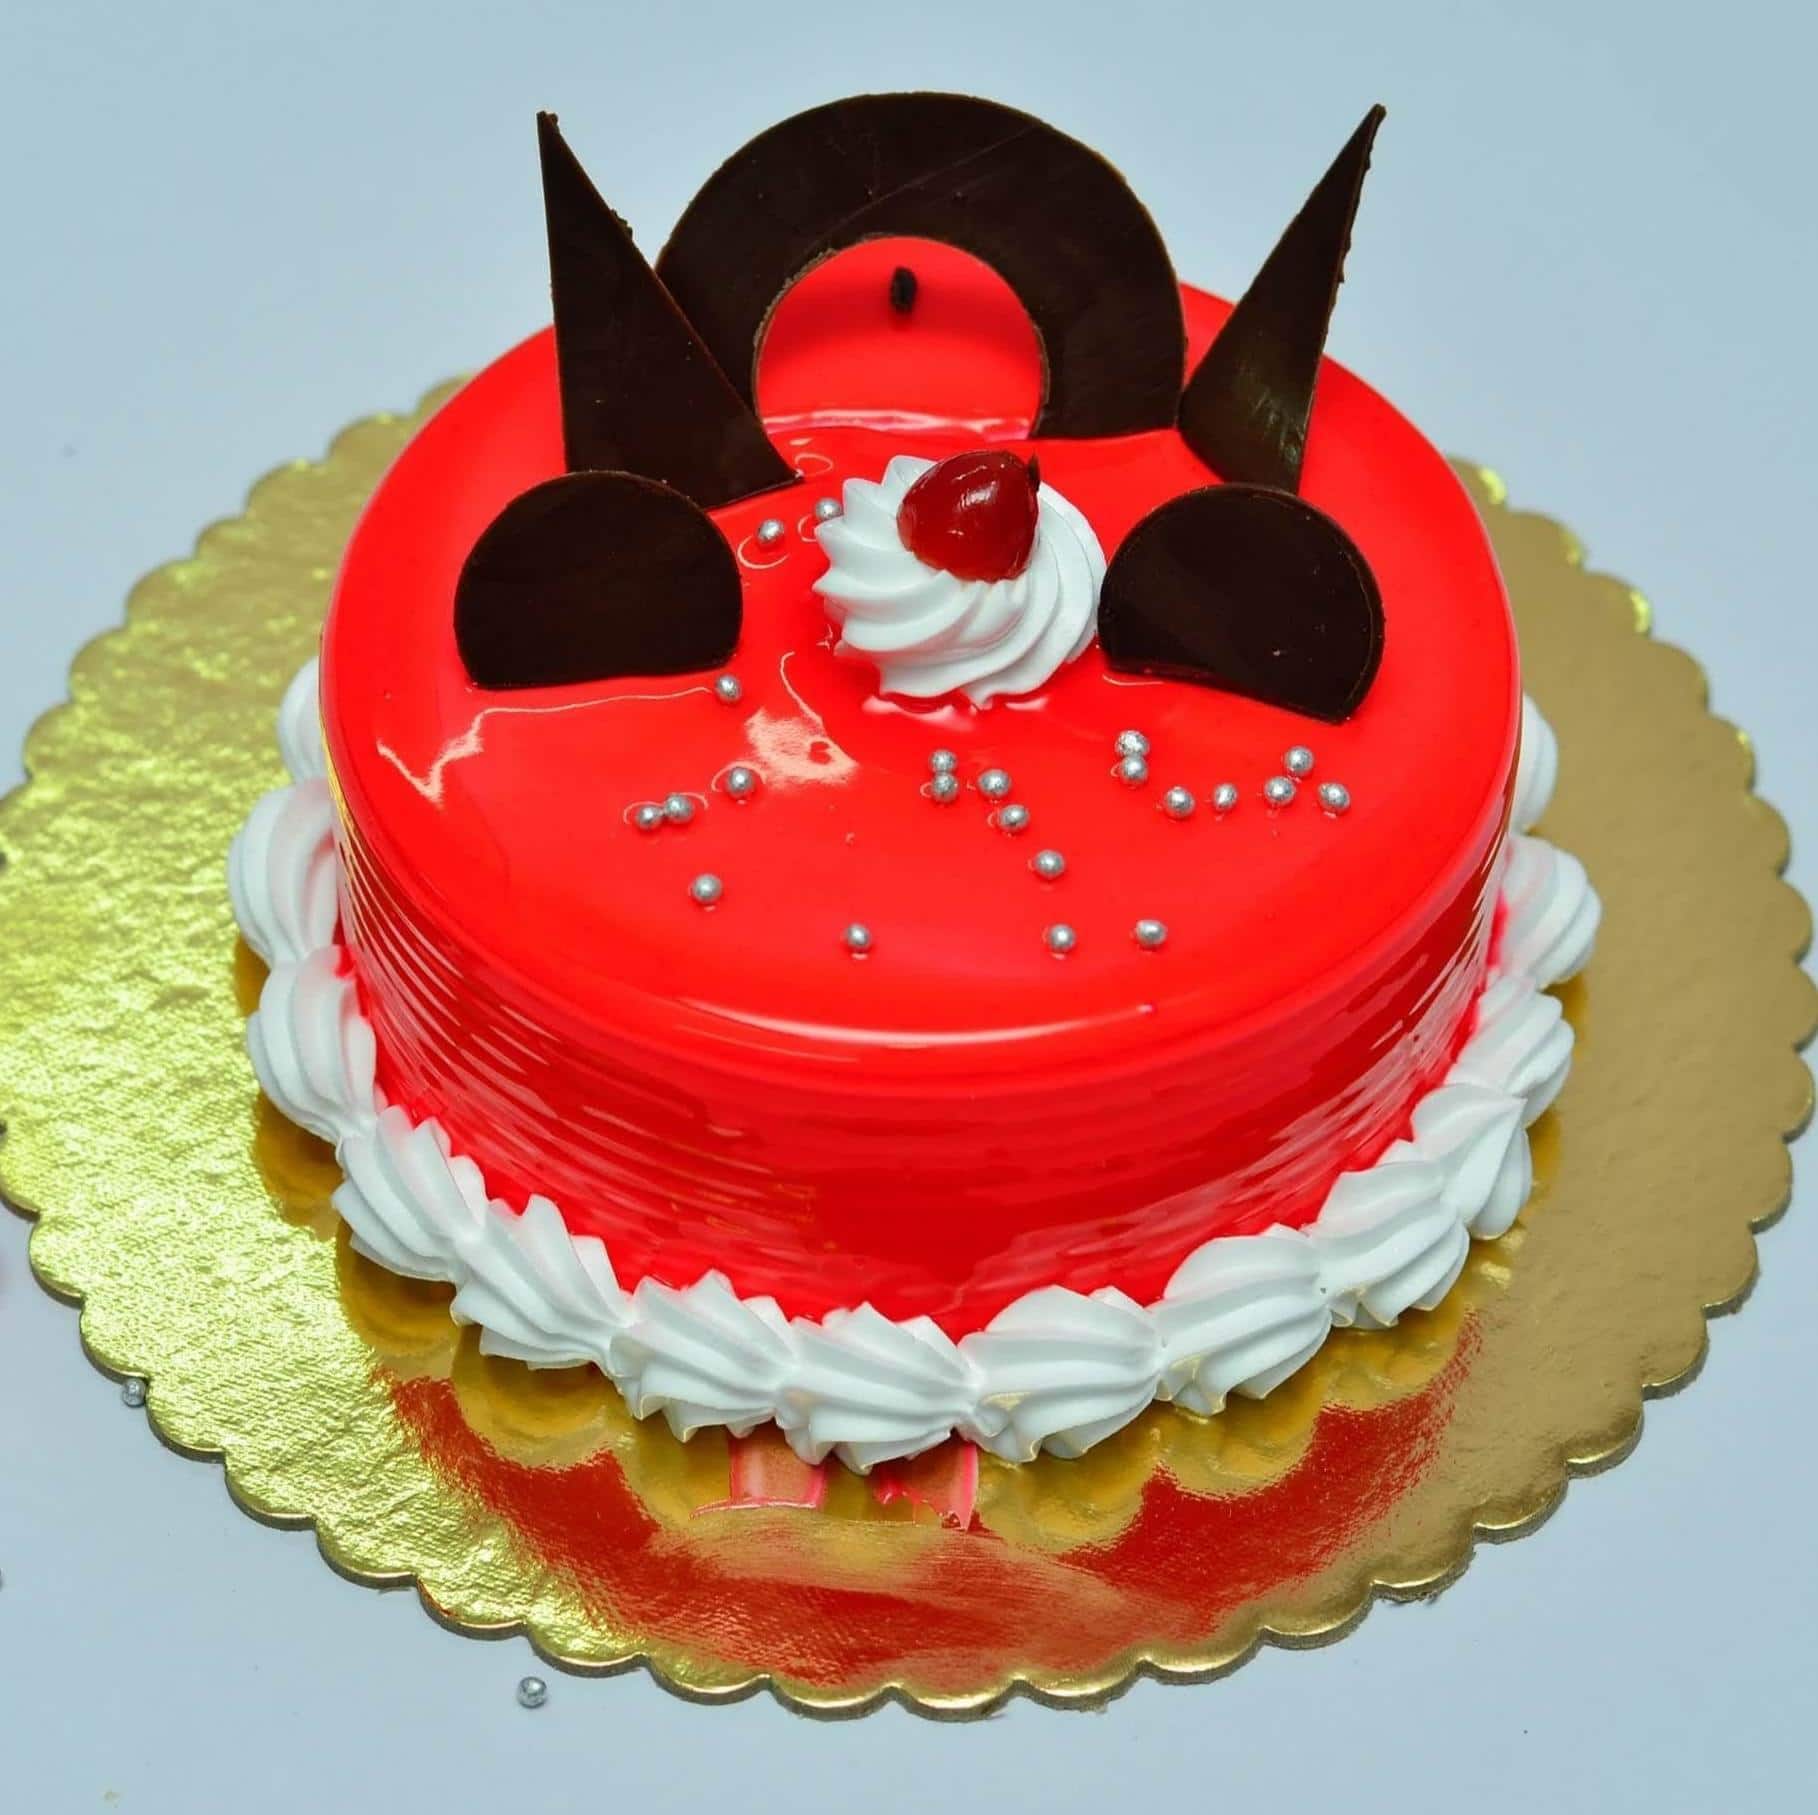 Pikachu Themed Cake in 2023 | Anniversary cake, Pikachu cake, Themed cakes